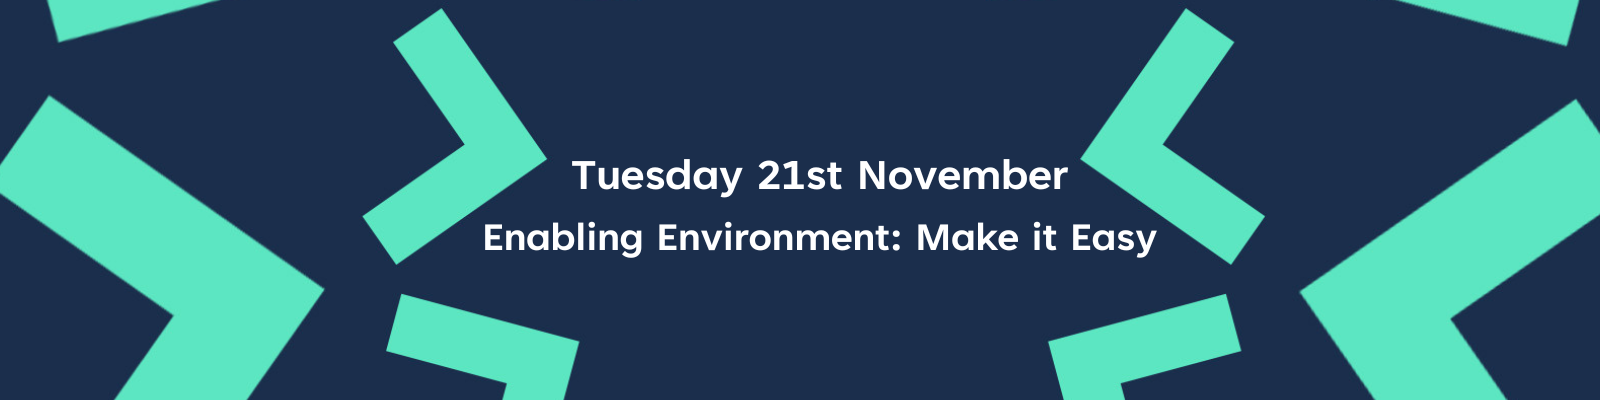 Tuesday 21st November: Enabling Environment: Make it Easy